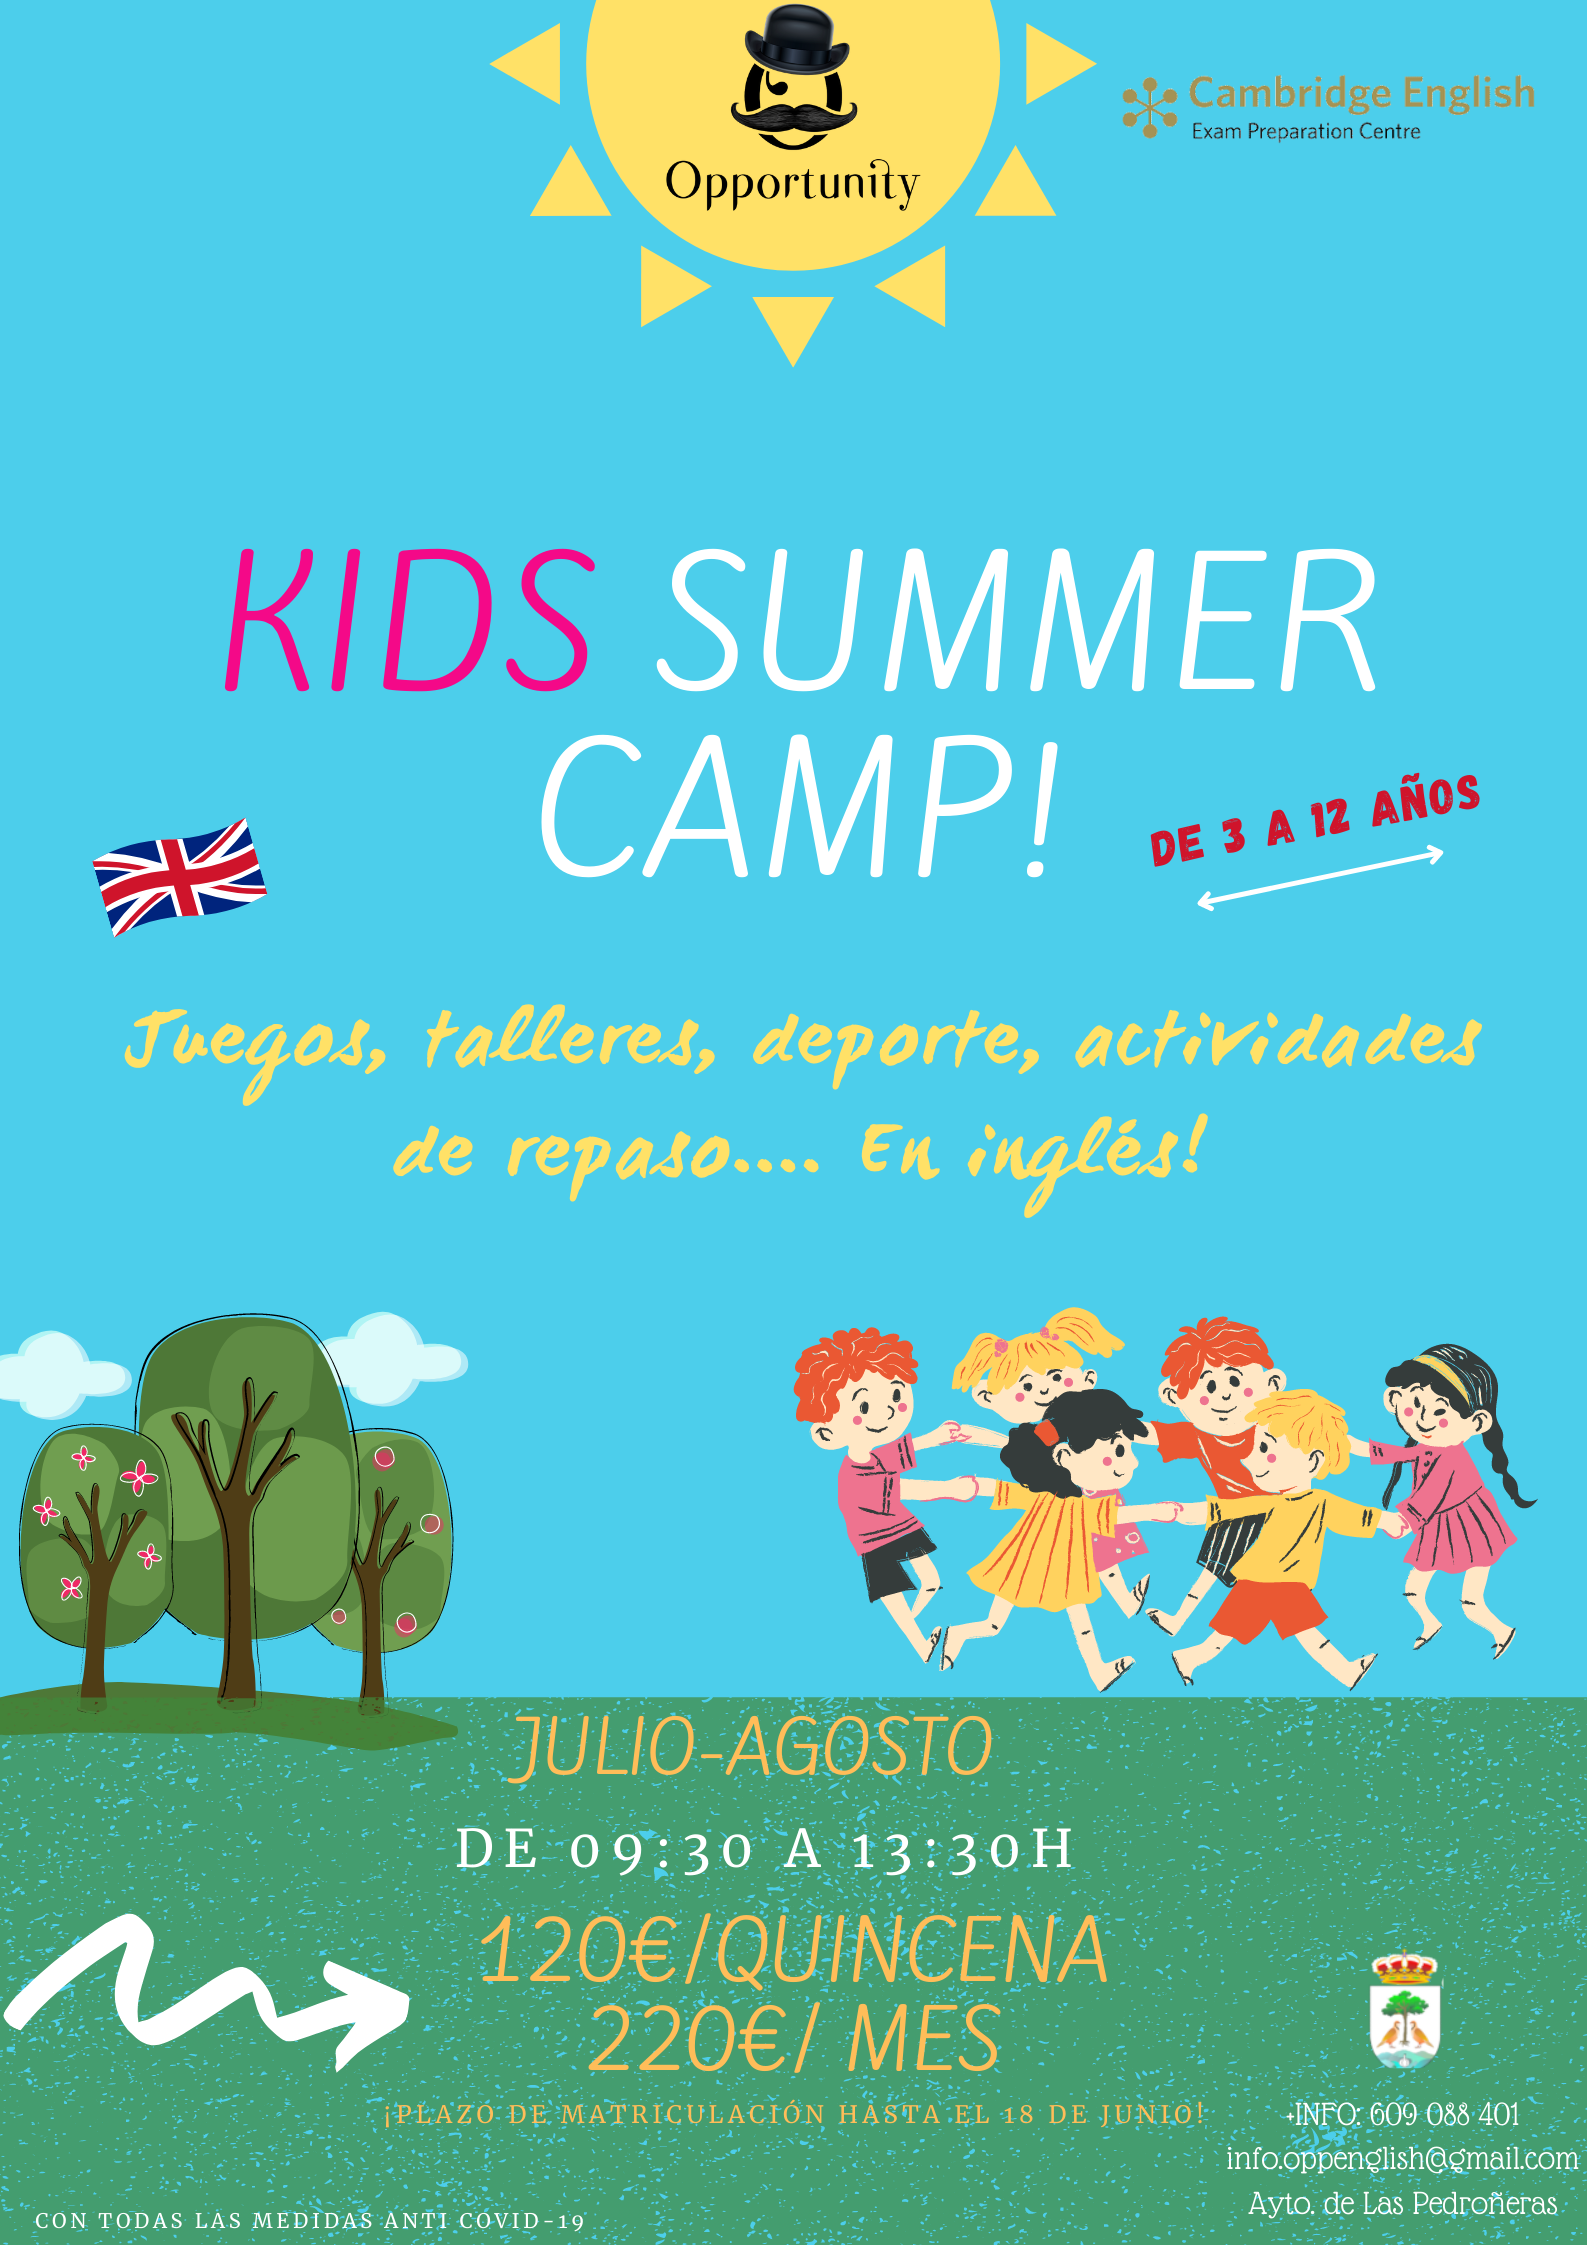 Kids Summer Camp! LP